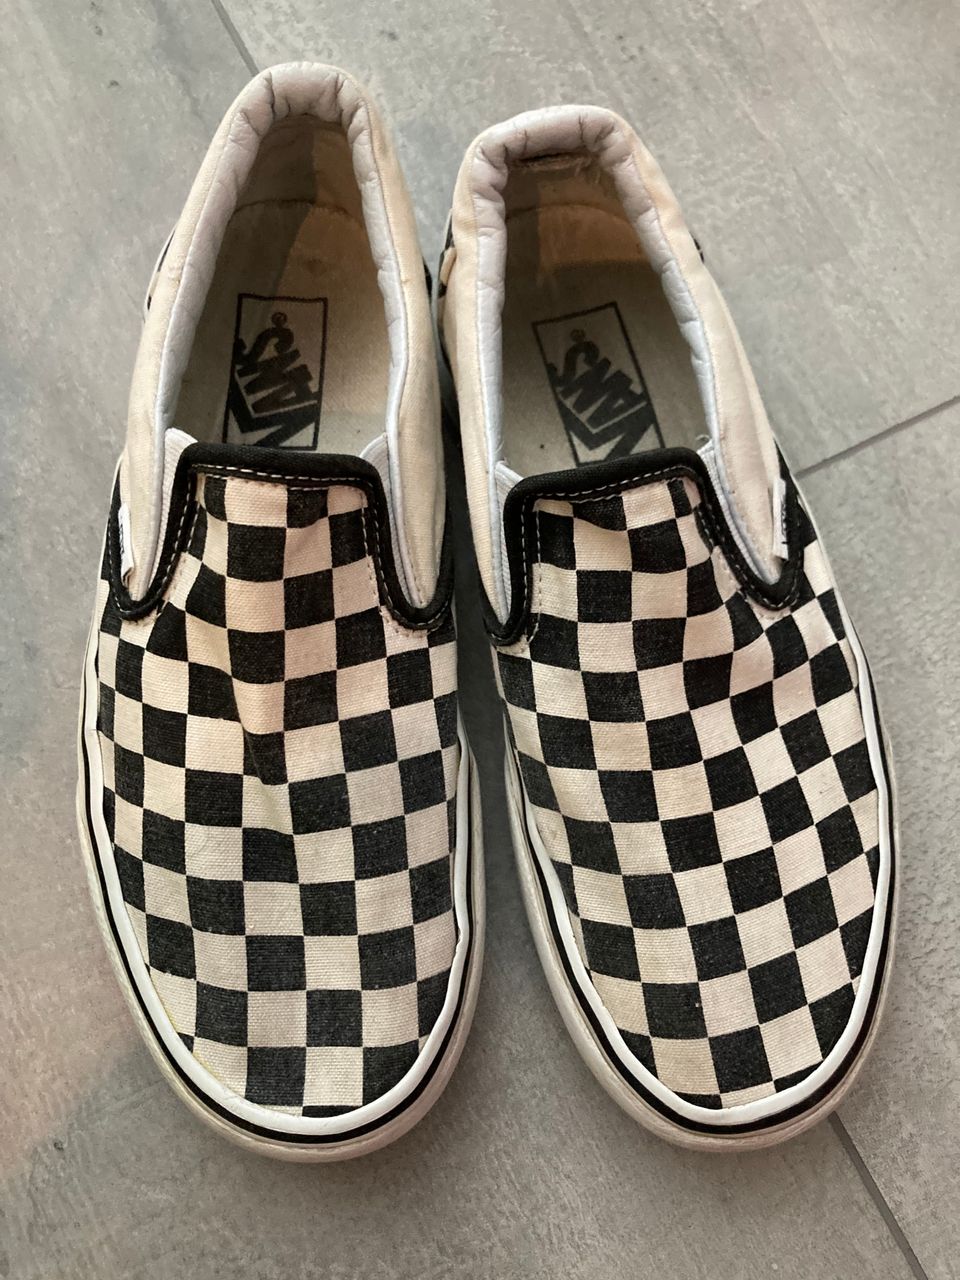 Vans tennarit, Checkerboard black/white